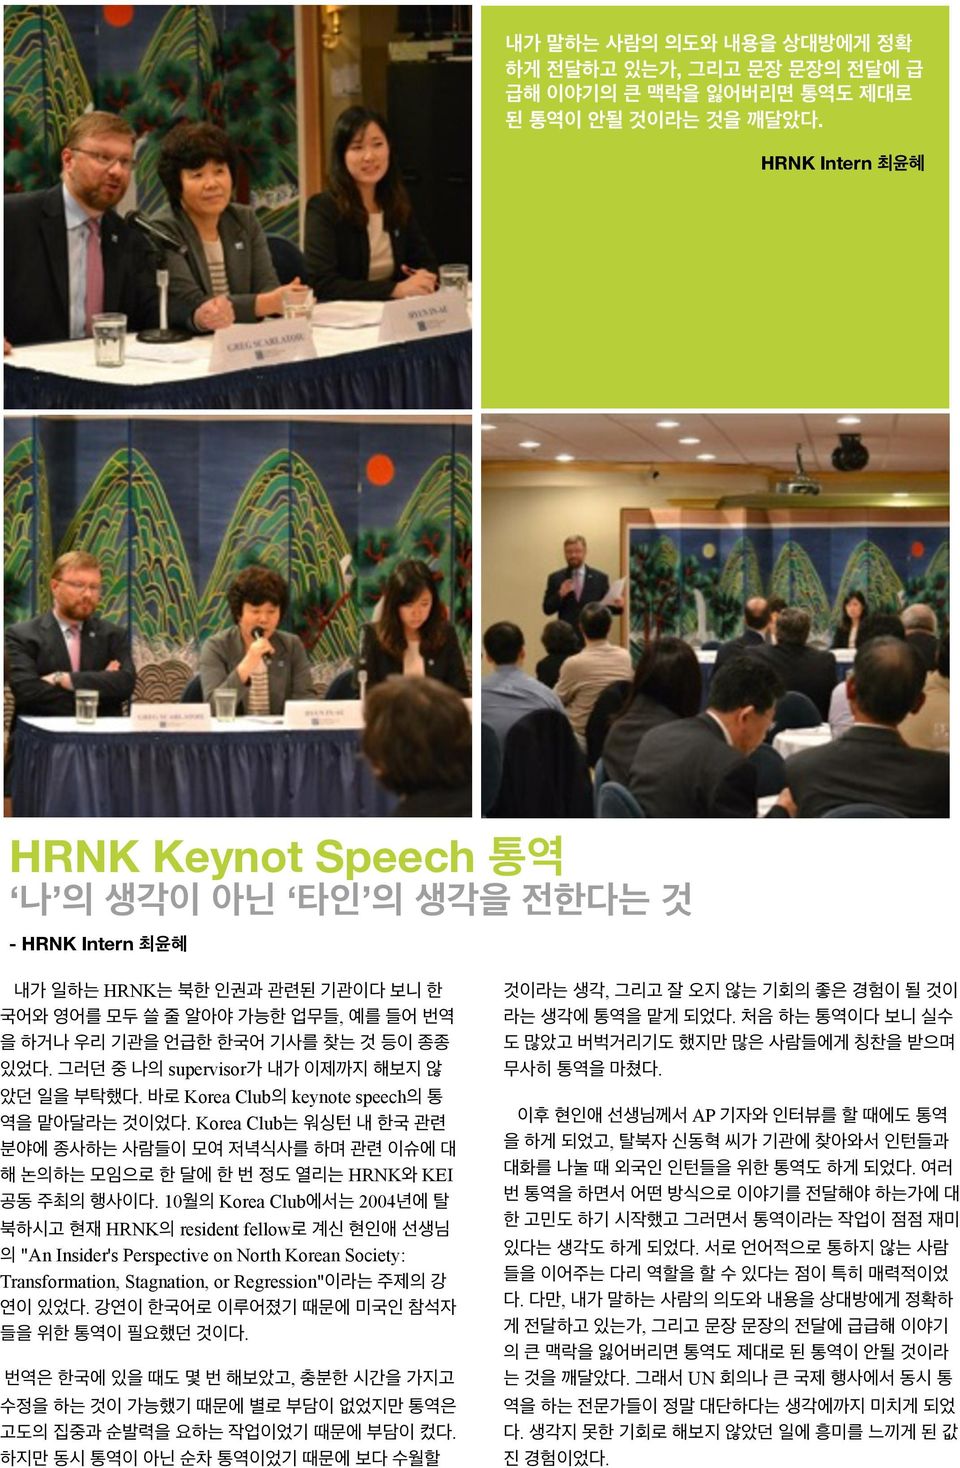 10 Korea Club 2004 HRNK resident fellow "An Insider's Perspective